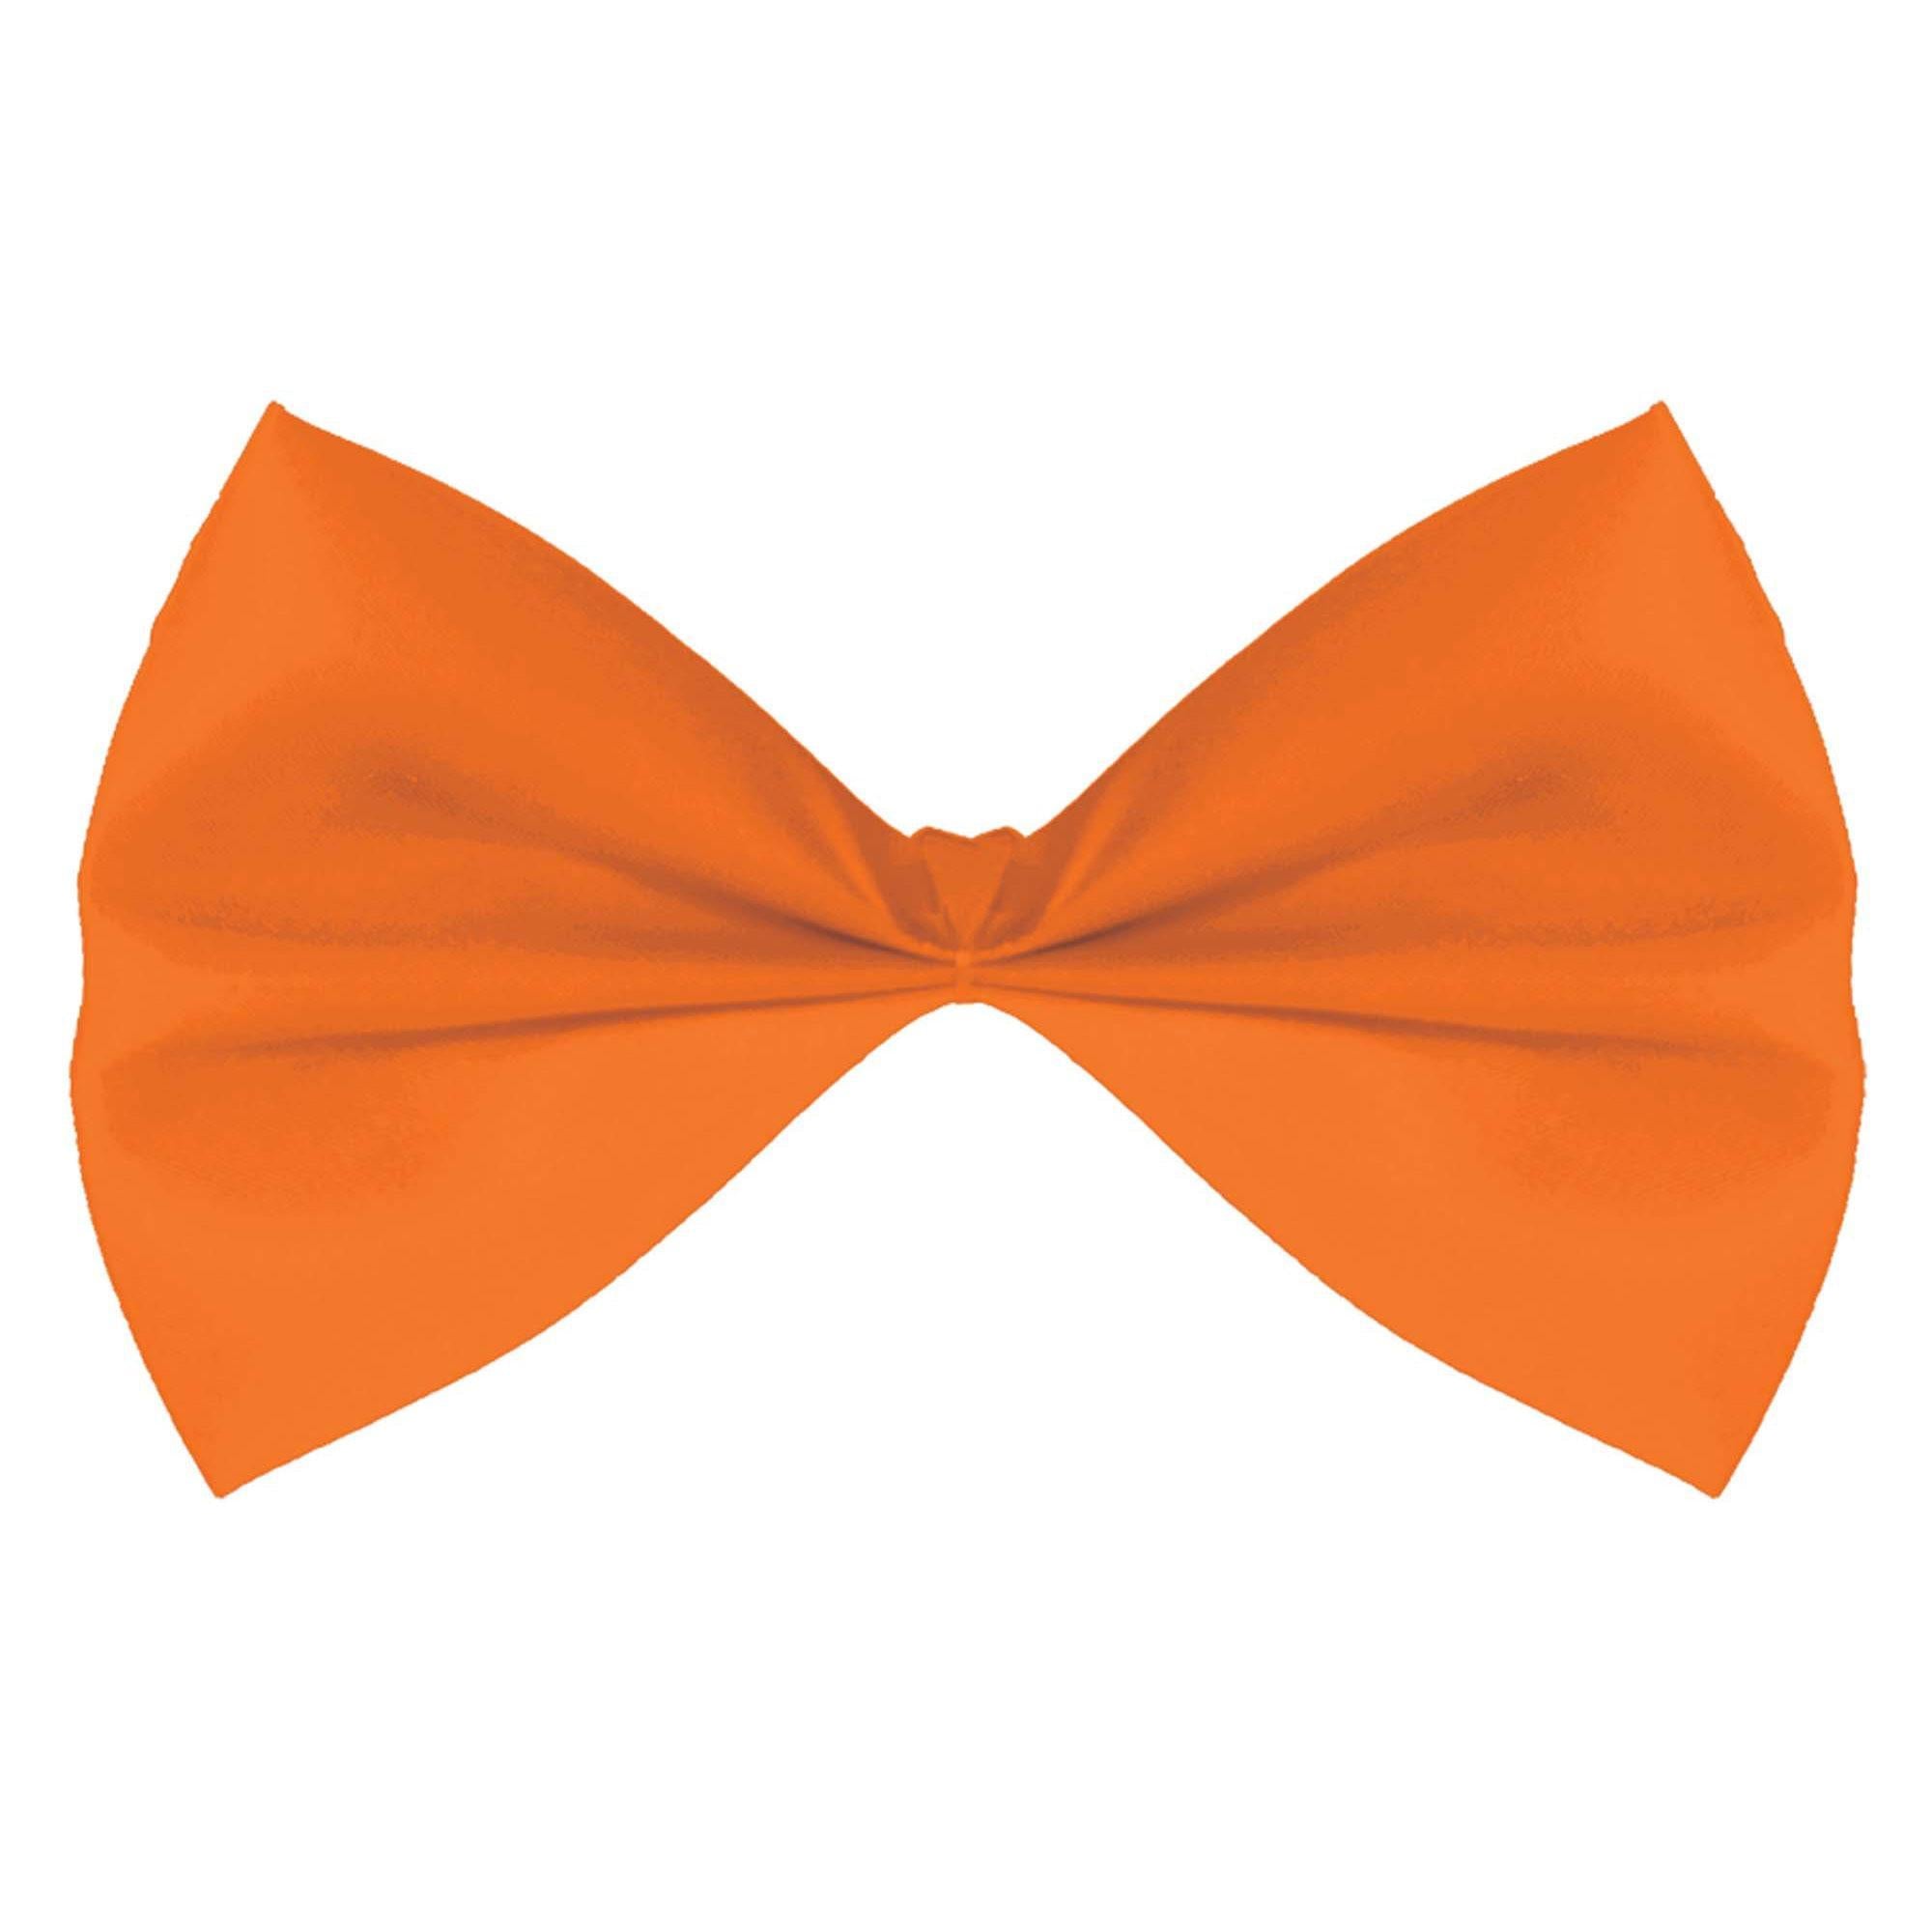 Bow Tie Orange Costumes & Apparel - Party Centre - Party Centre